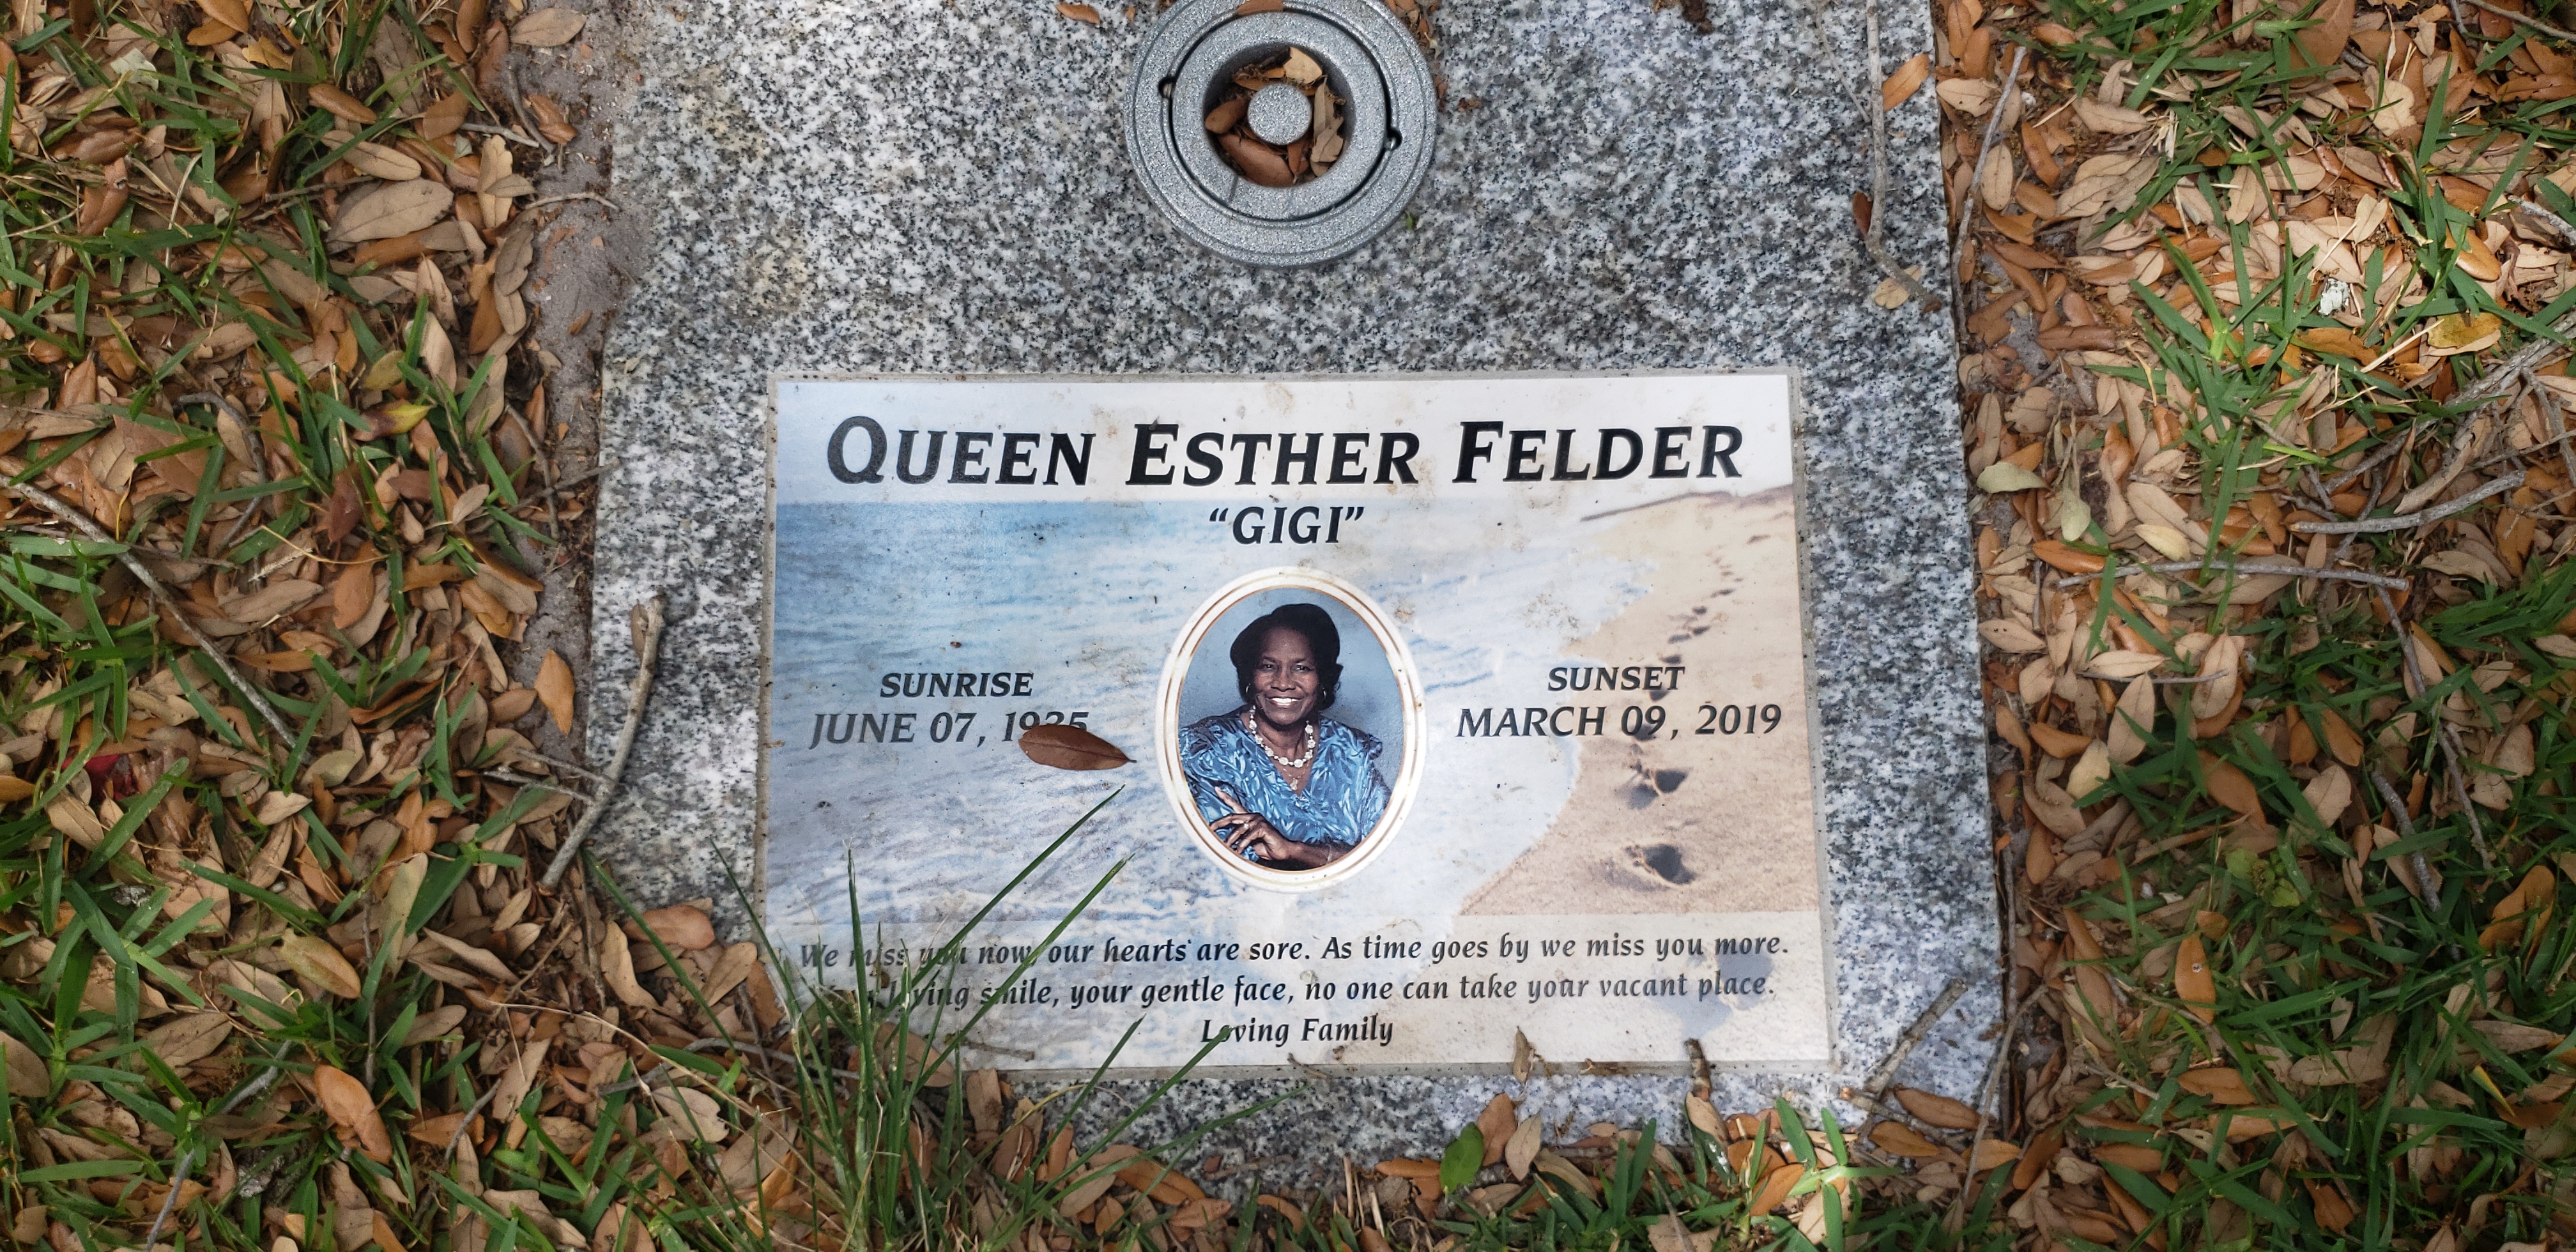 Queen Esther "Gigi" Felder